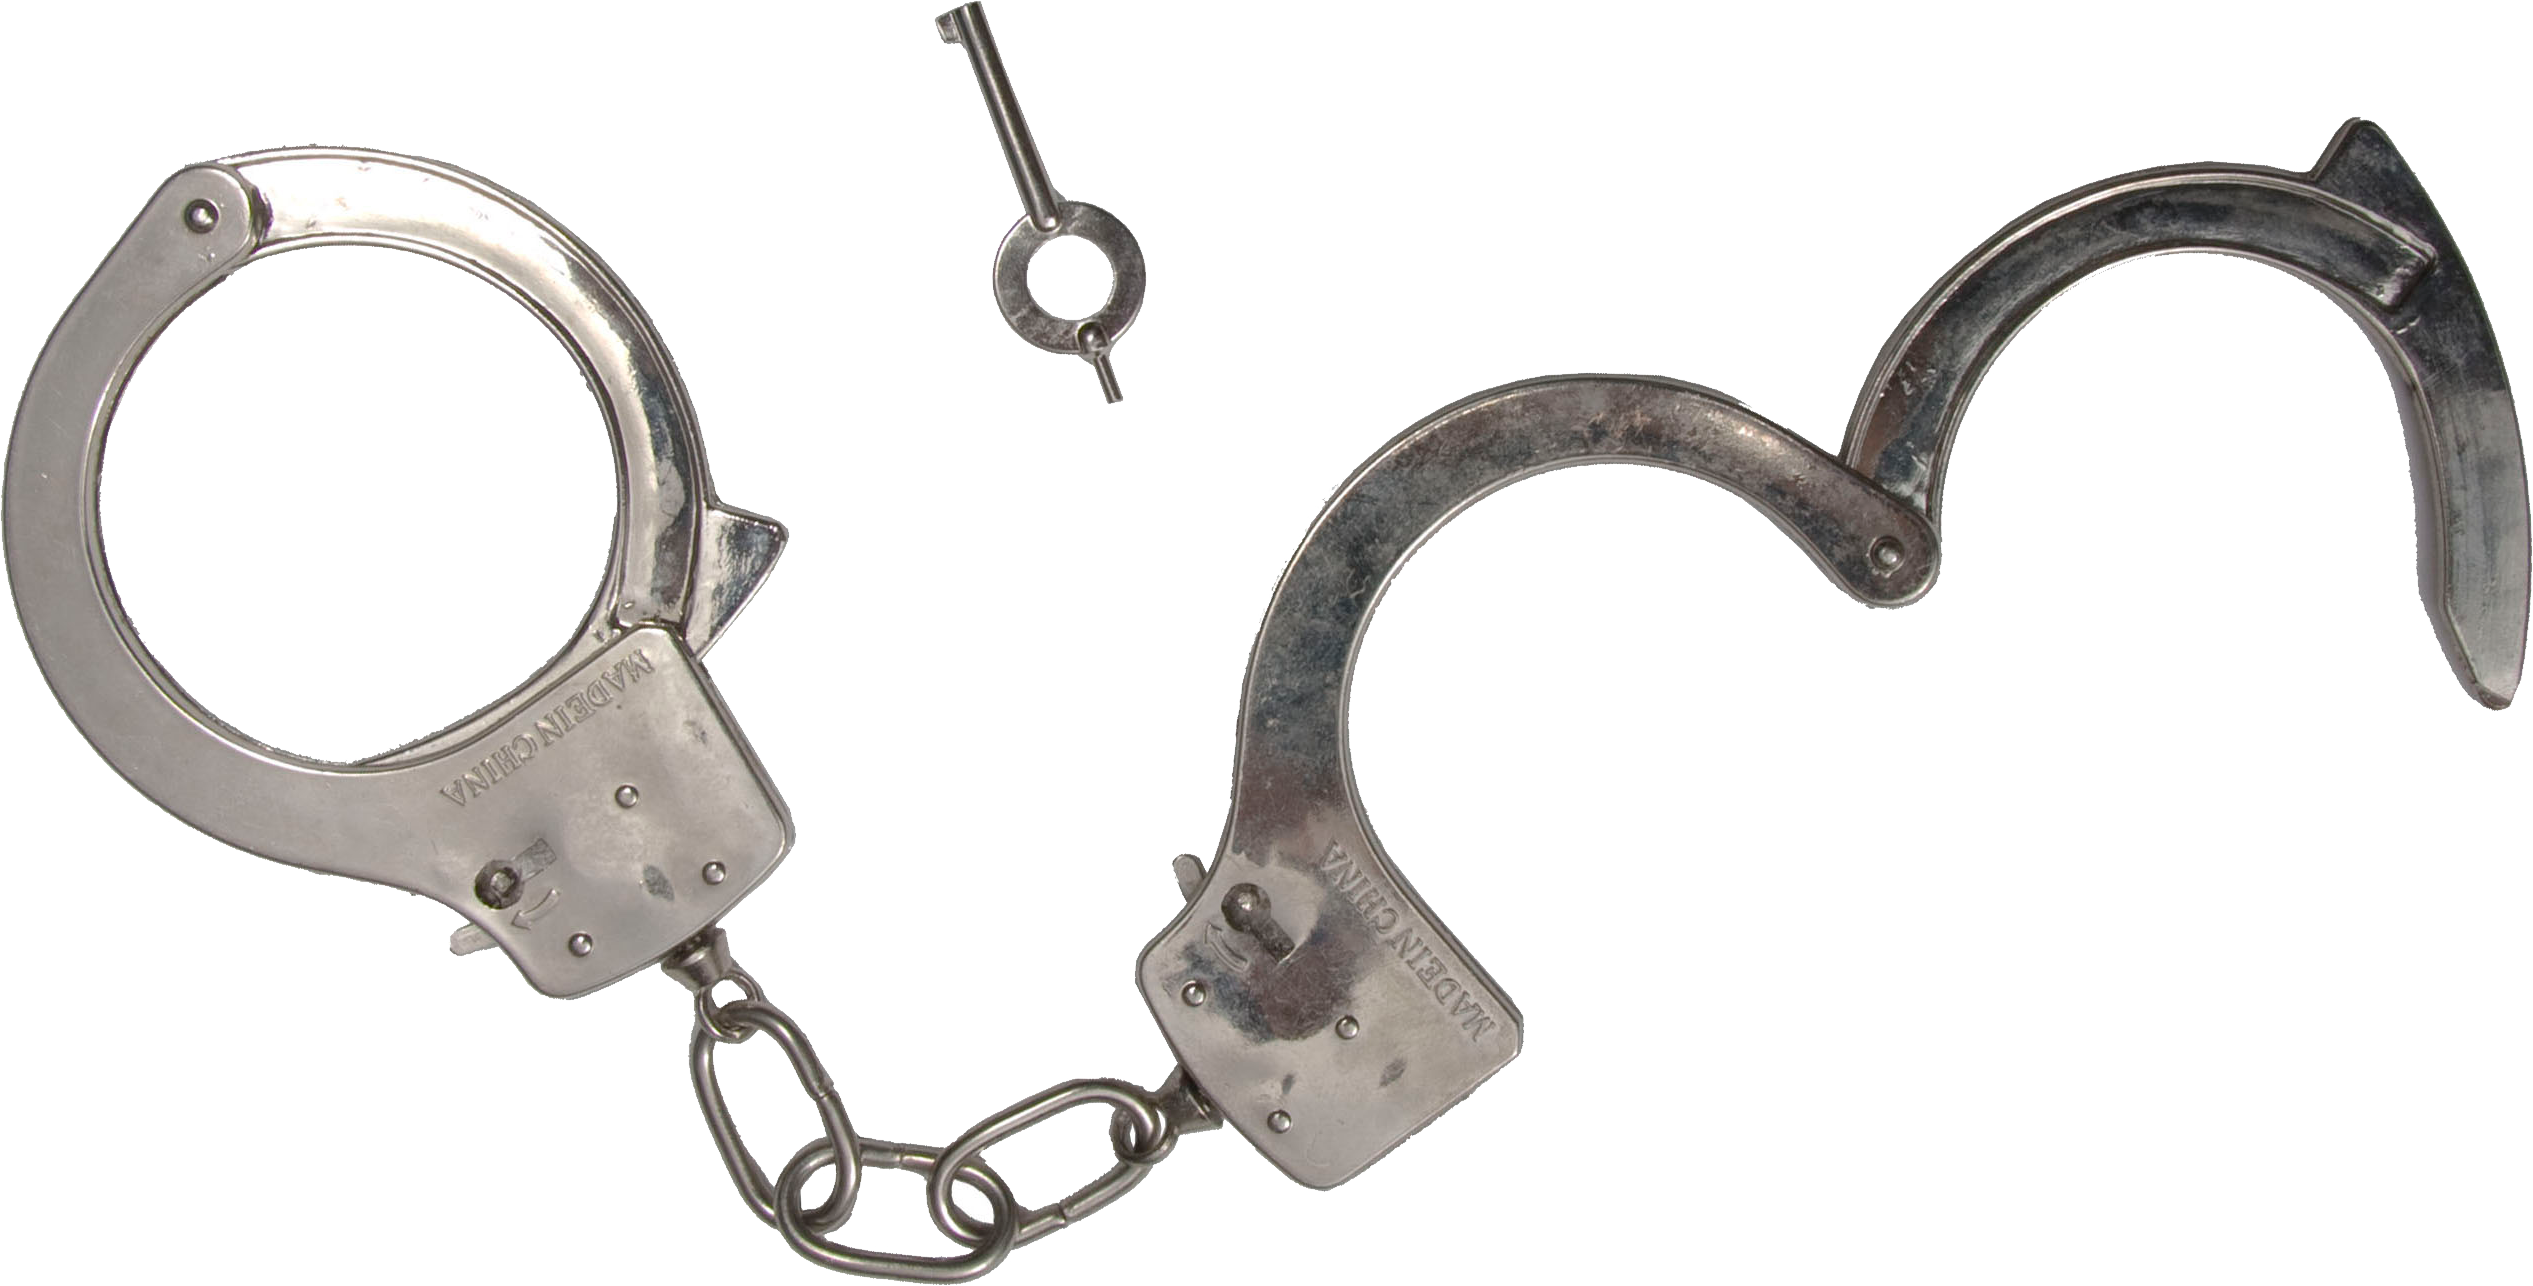 Handcuff clipart handcuff key. Opened hand cuffs classic